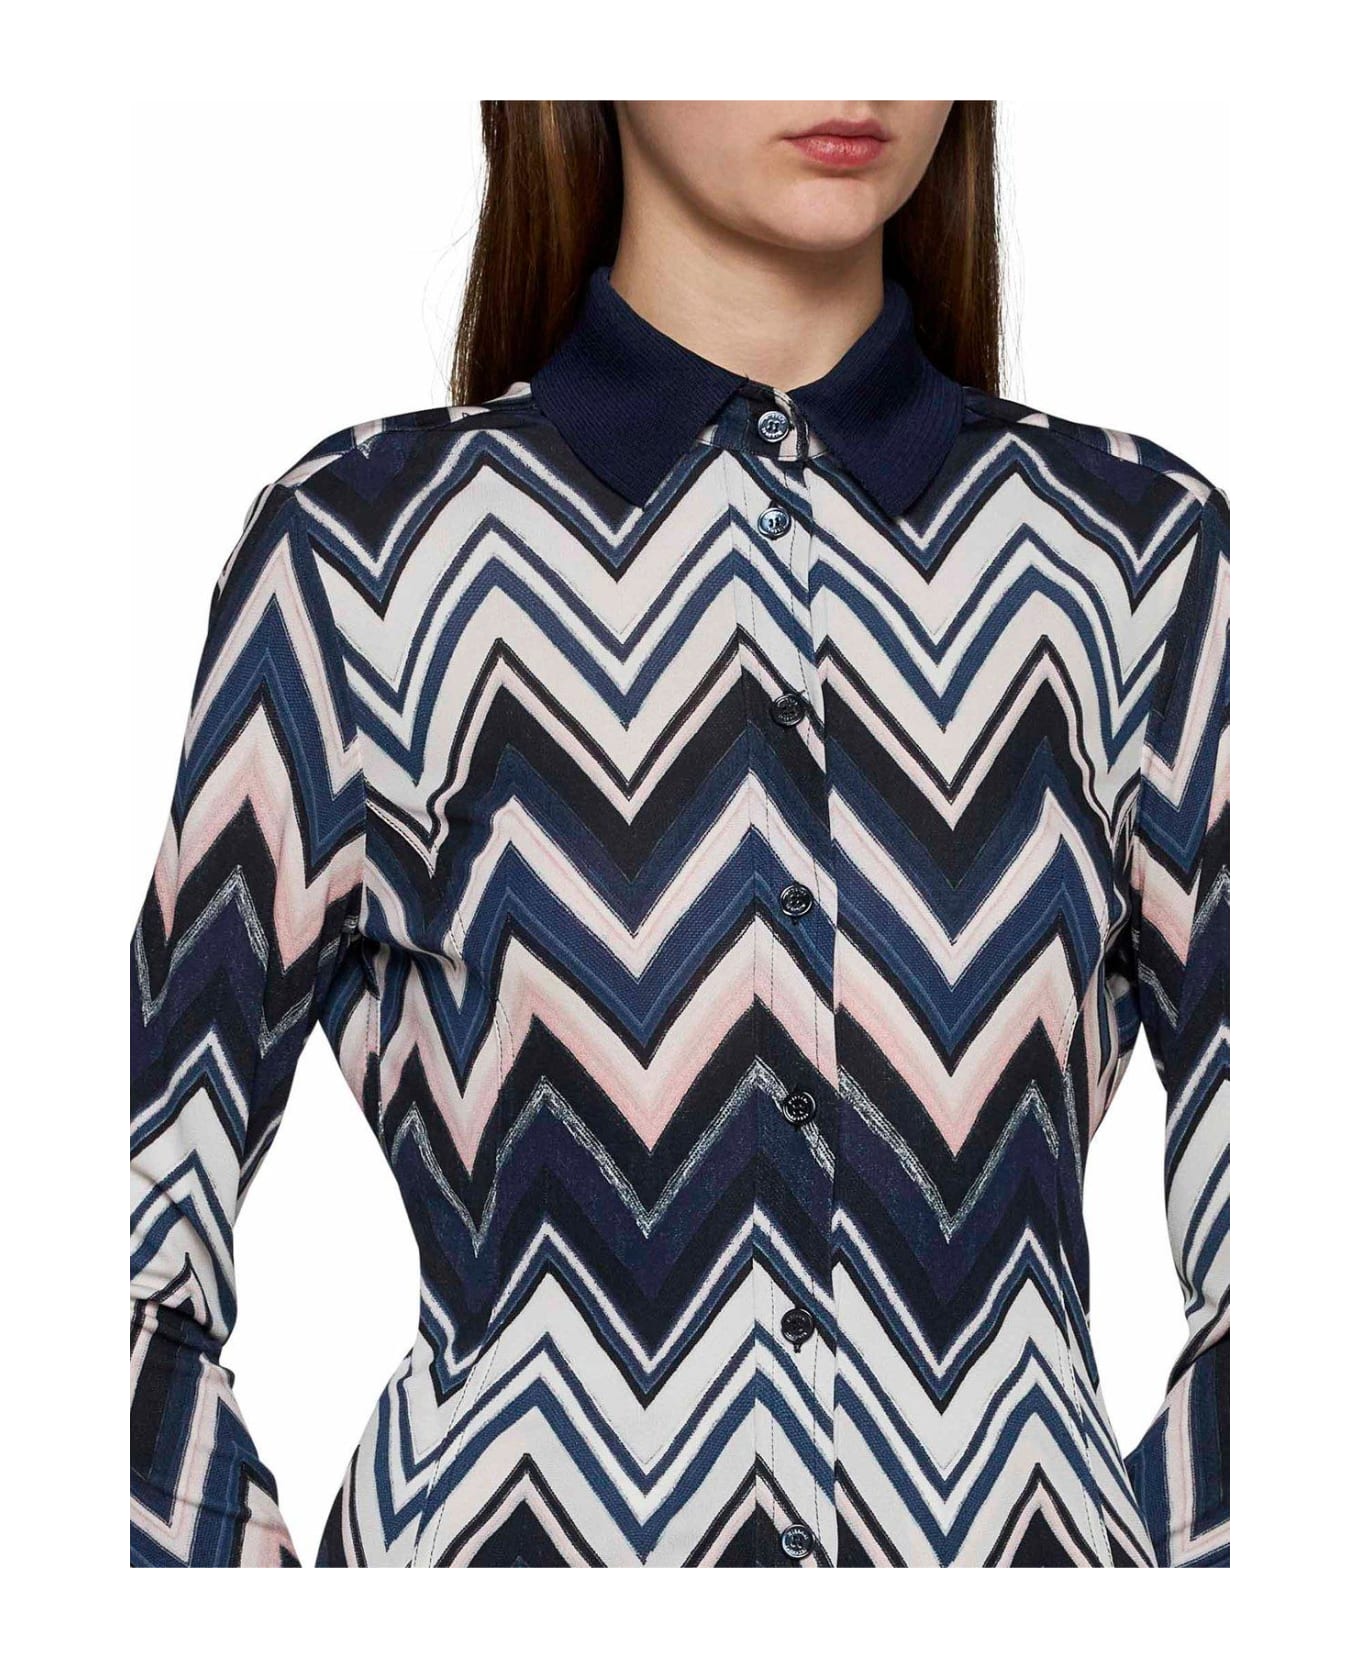 Missoni Zigzag Printed Long Sleeved Shirt - Multicolour シャツ